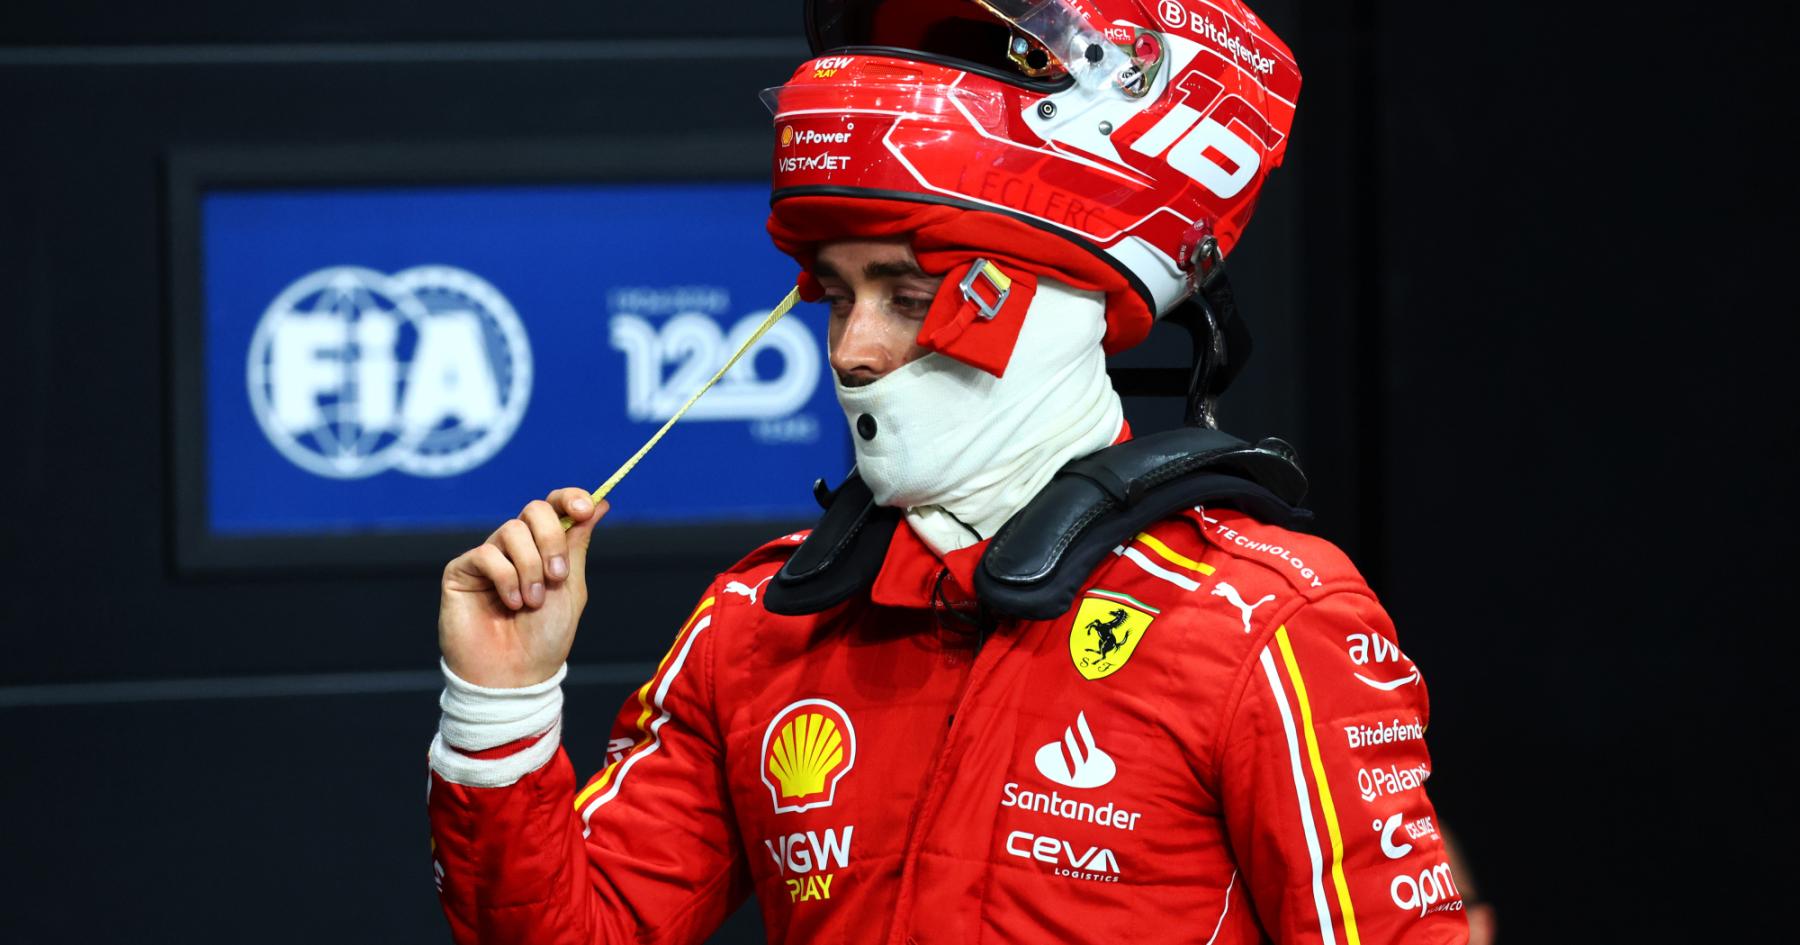 Leclerc's Dismal Performance: Ferrari's Qualifying Experiment Gone Awry